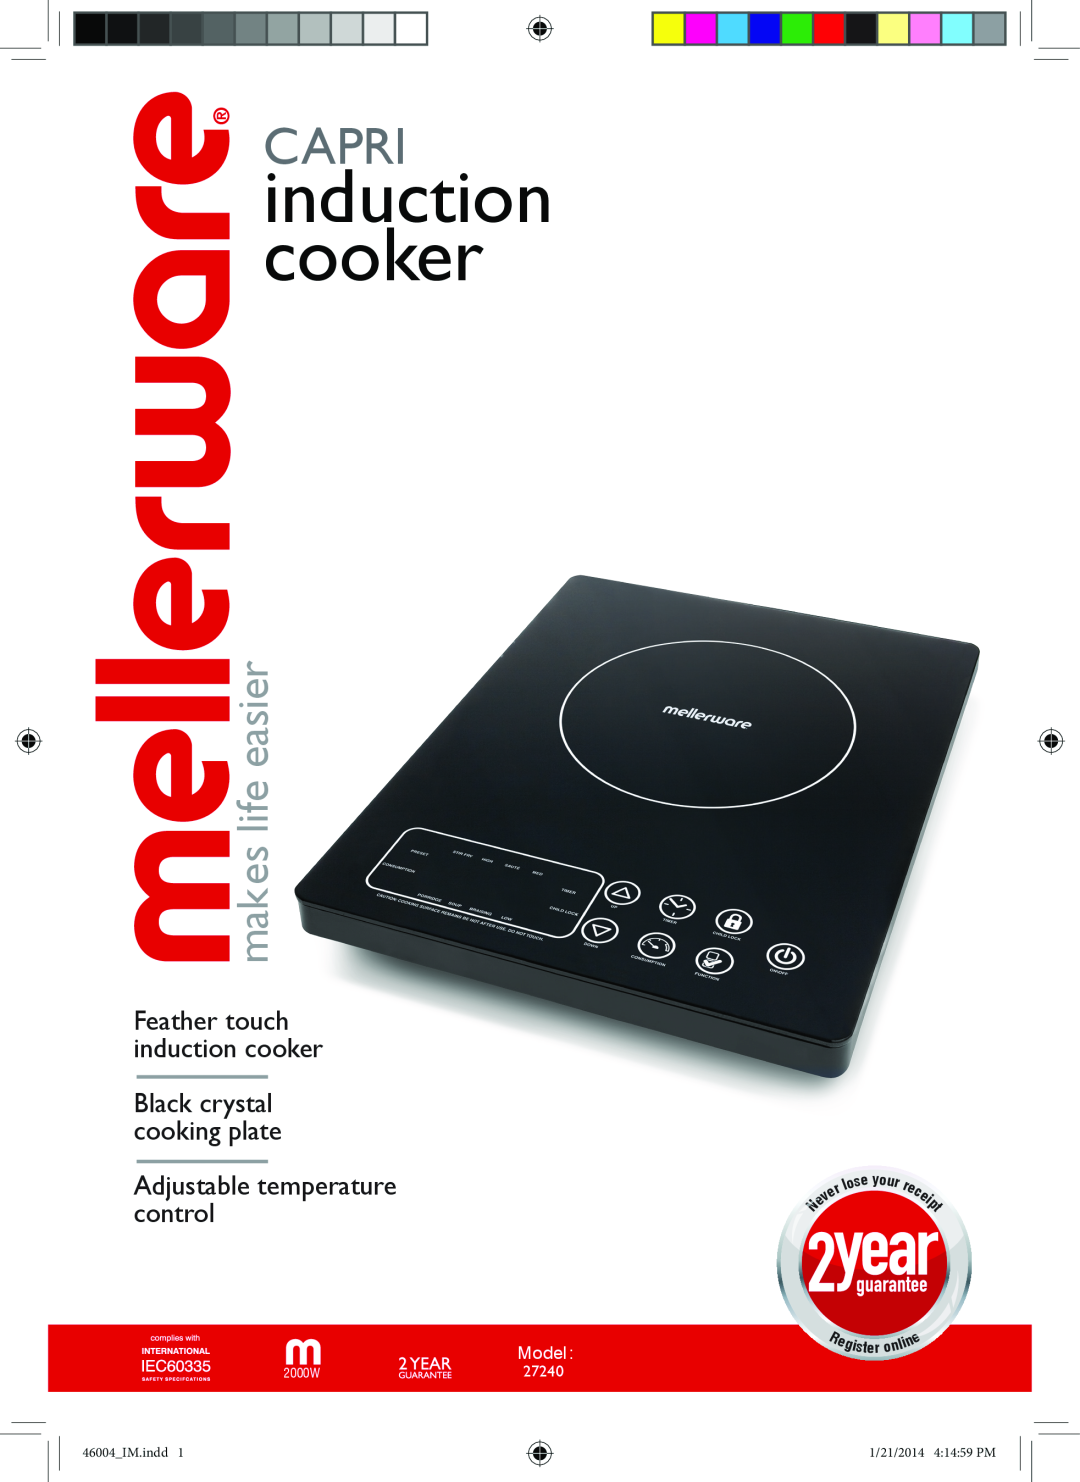 Mellerware 27240 manual induction cooker, Capri, makes life easier, Adjustable temperature control, Model, e yo 